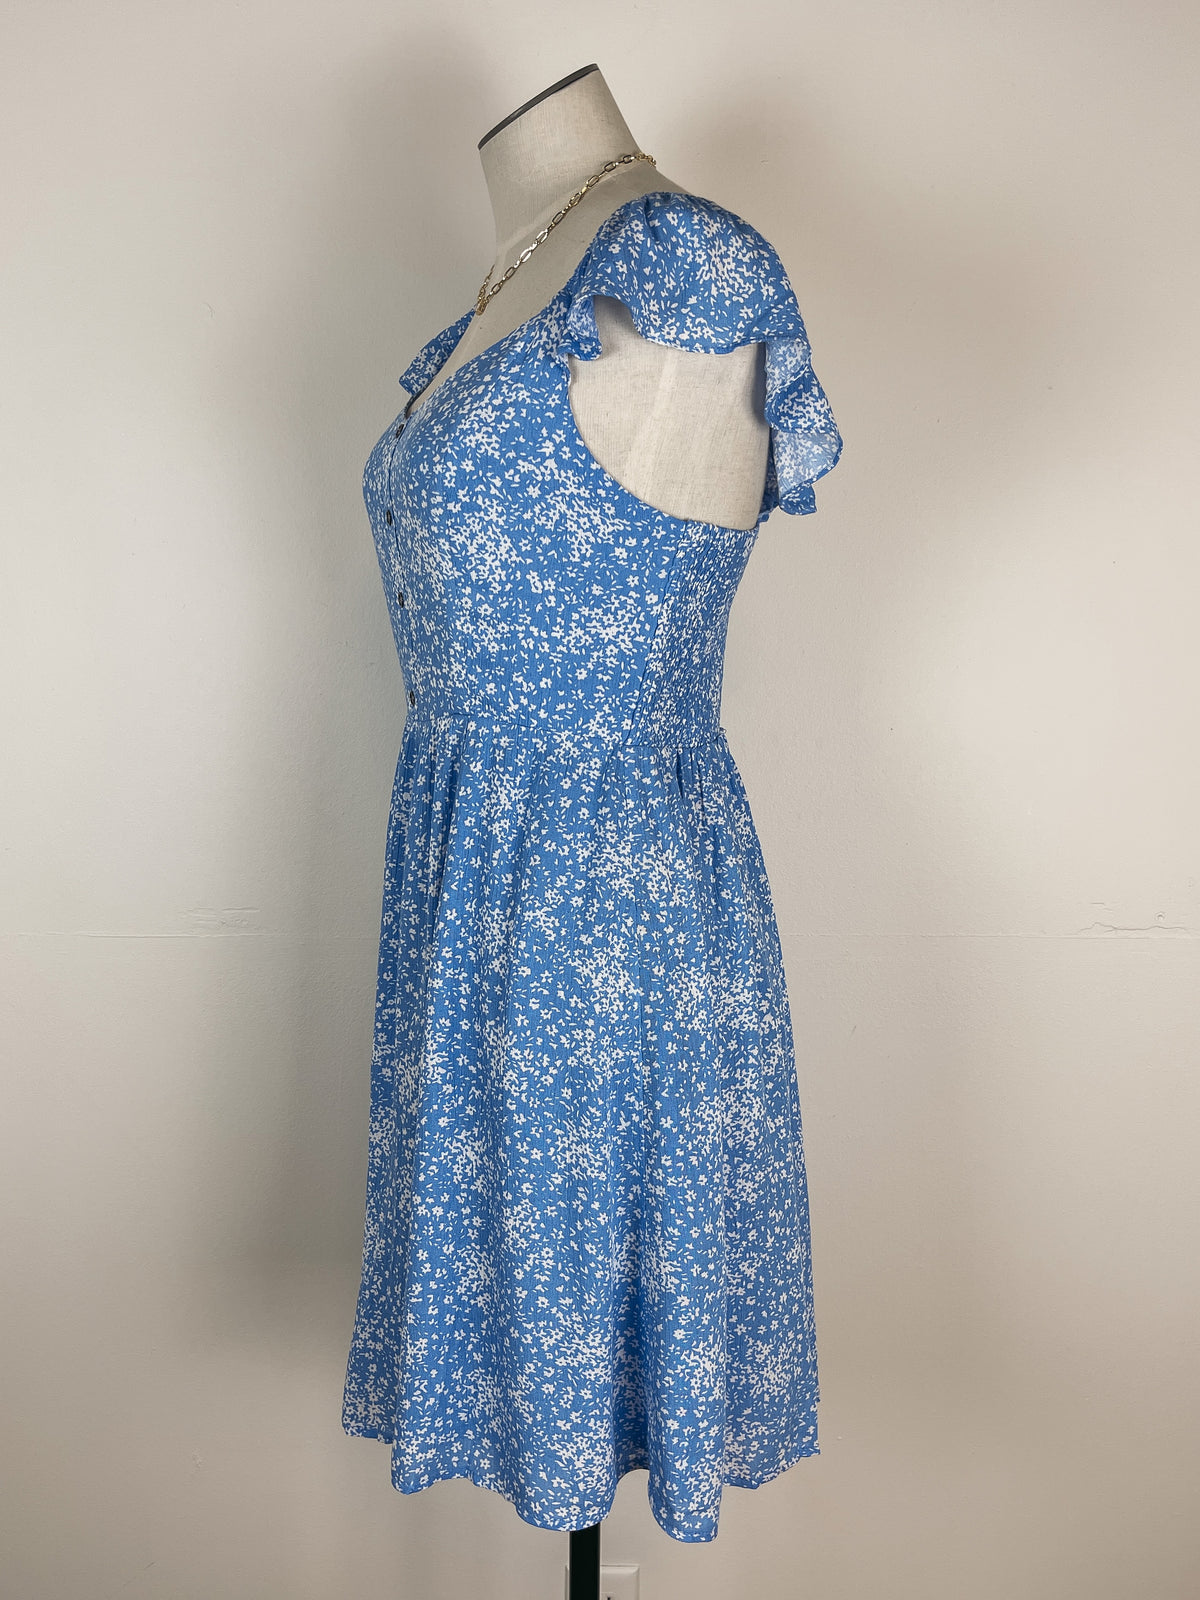 Ruffle Sleeve Floral Dress in Sky Blue